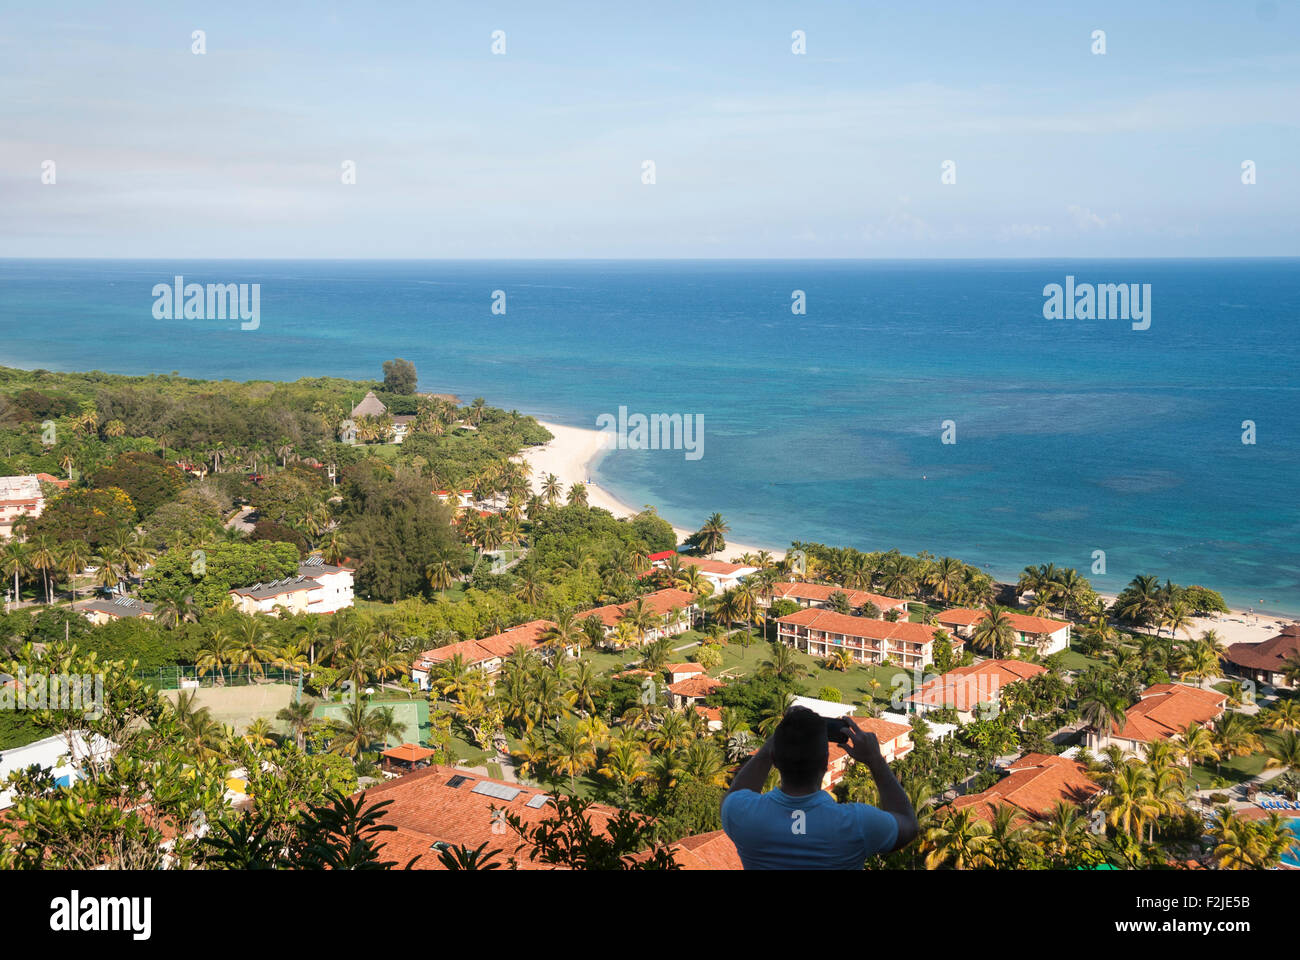 Un uomo prende una fotografia del Breezes Jibacoa resort da una collina lookout in Cuba Foto Stock